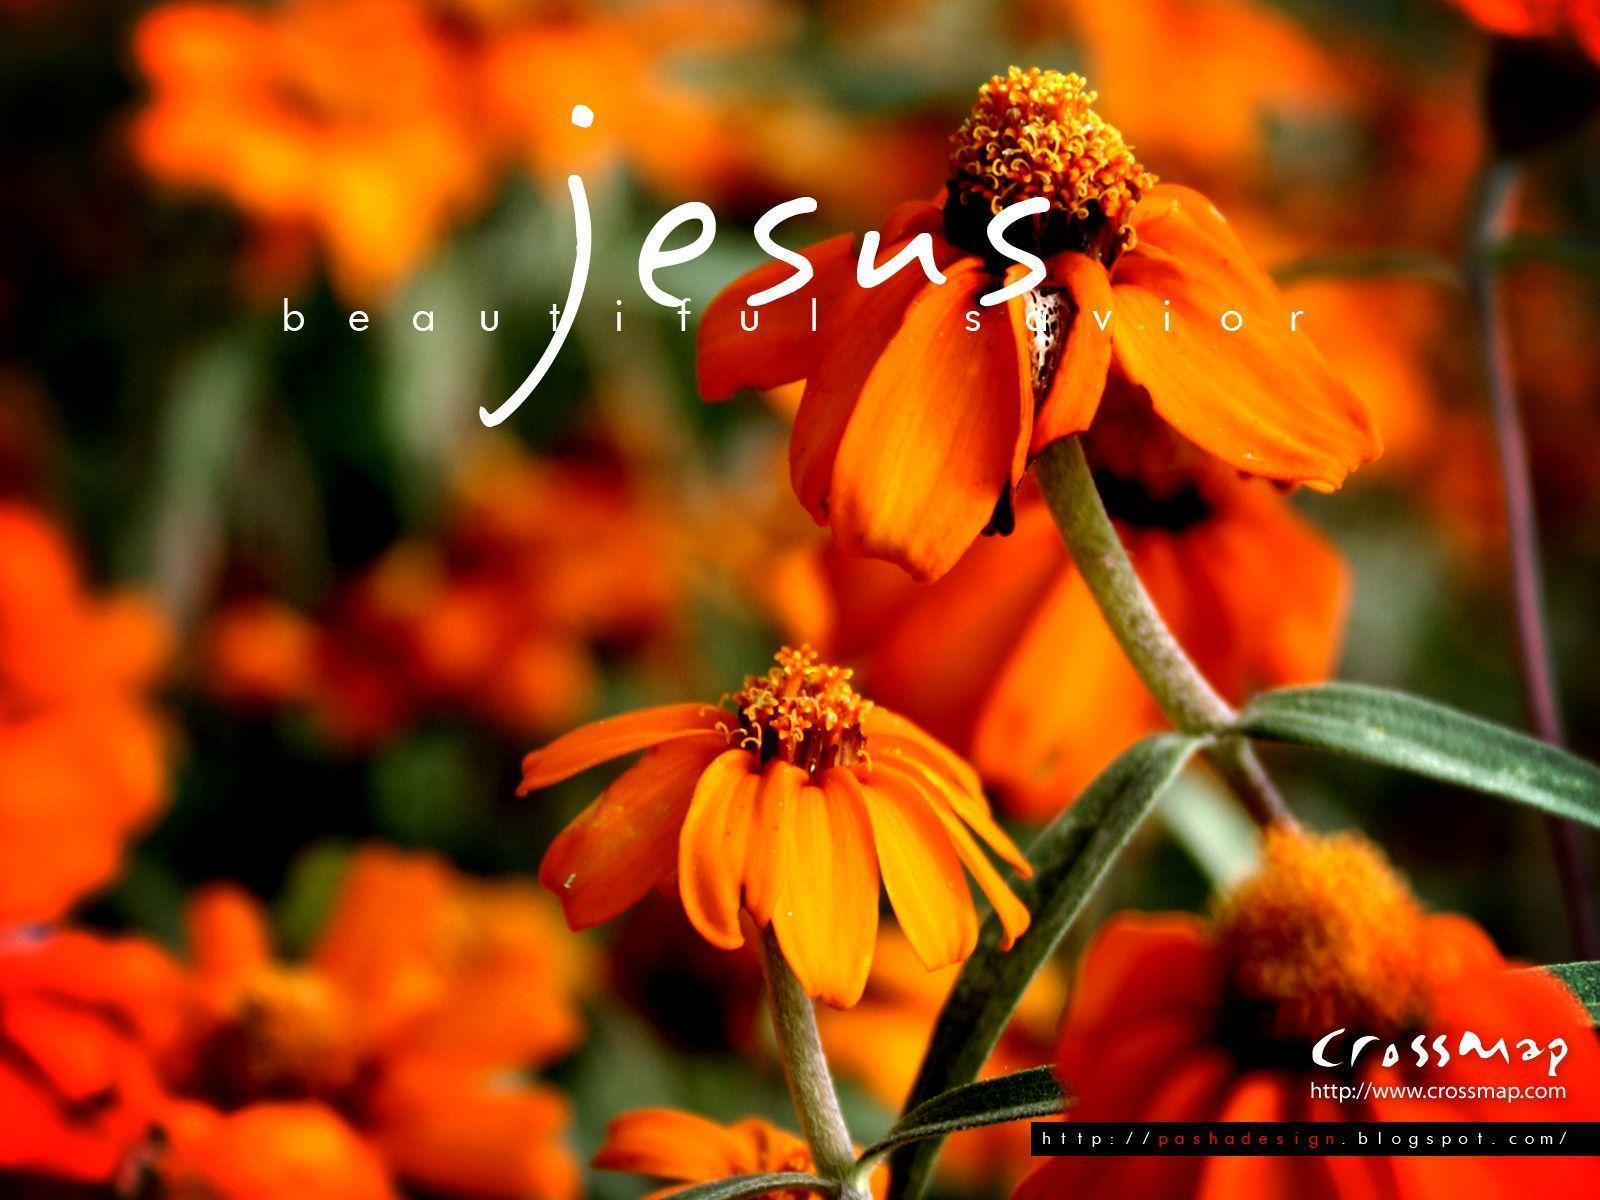 Jesus Beautiful Savior 3